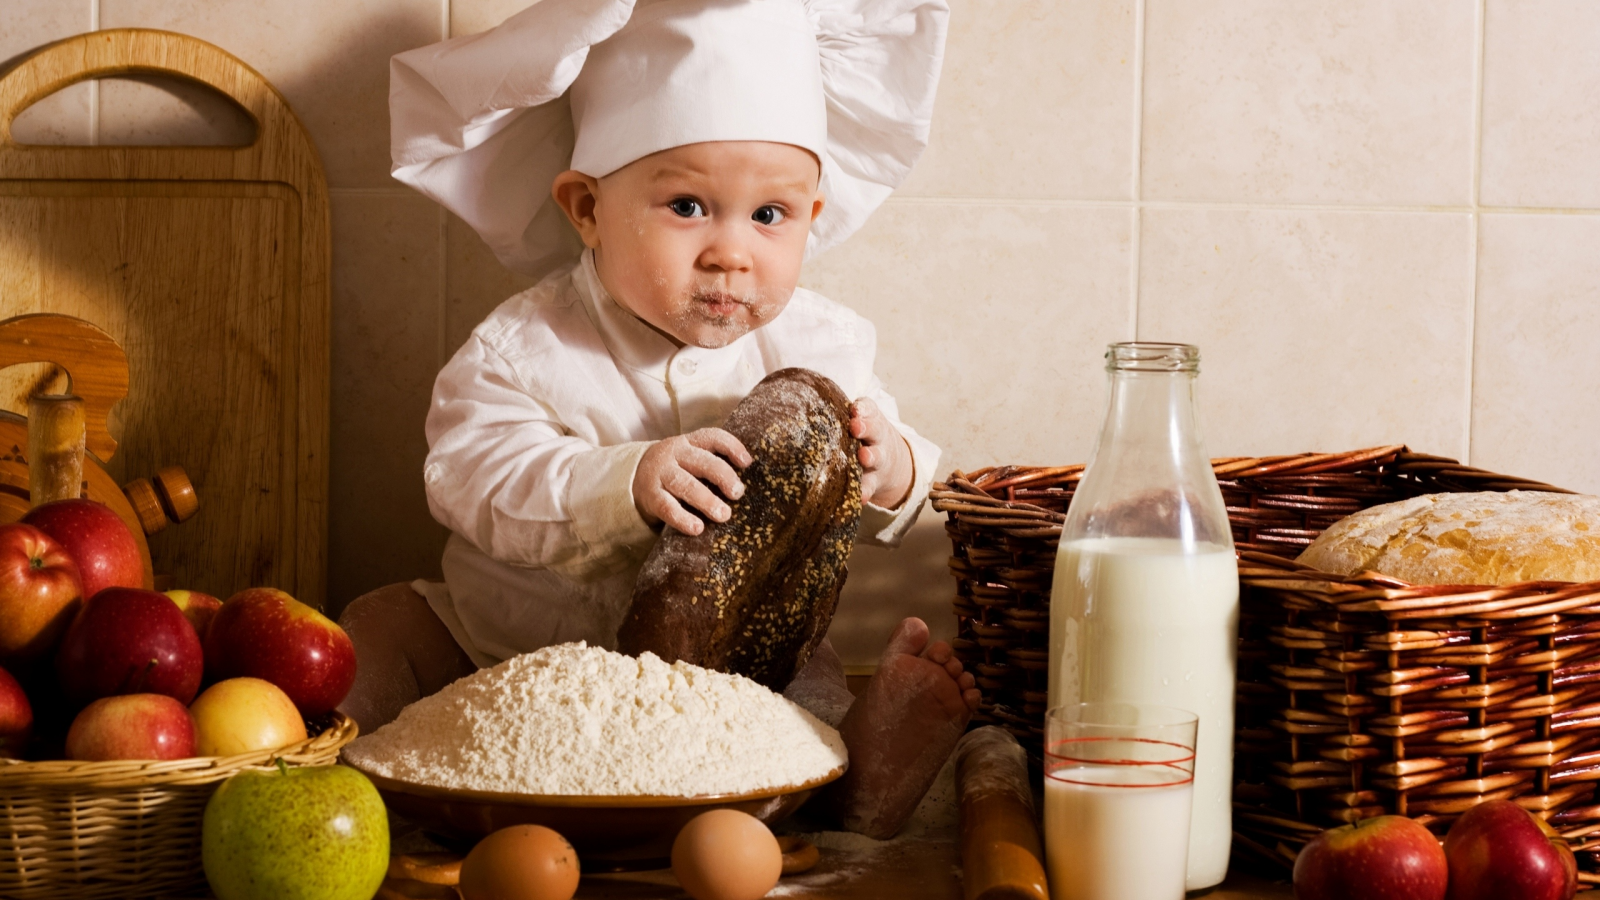 bread, baby, cap, flour, boy, milk, fruits, eggs, apples, vegetables, cook, babe, kitchen